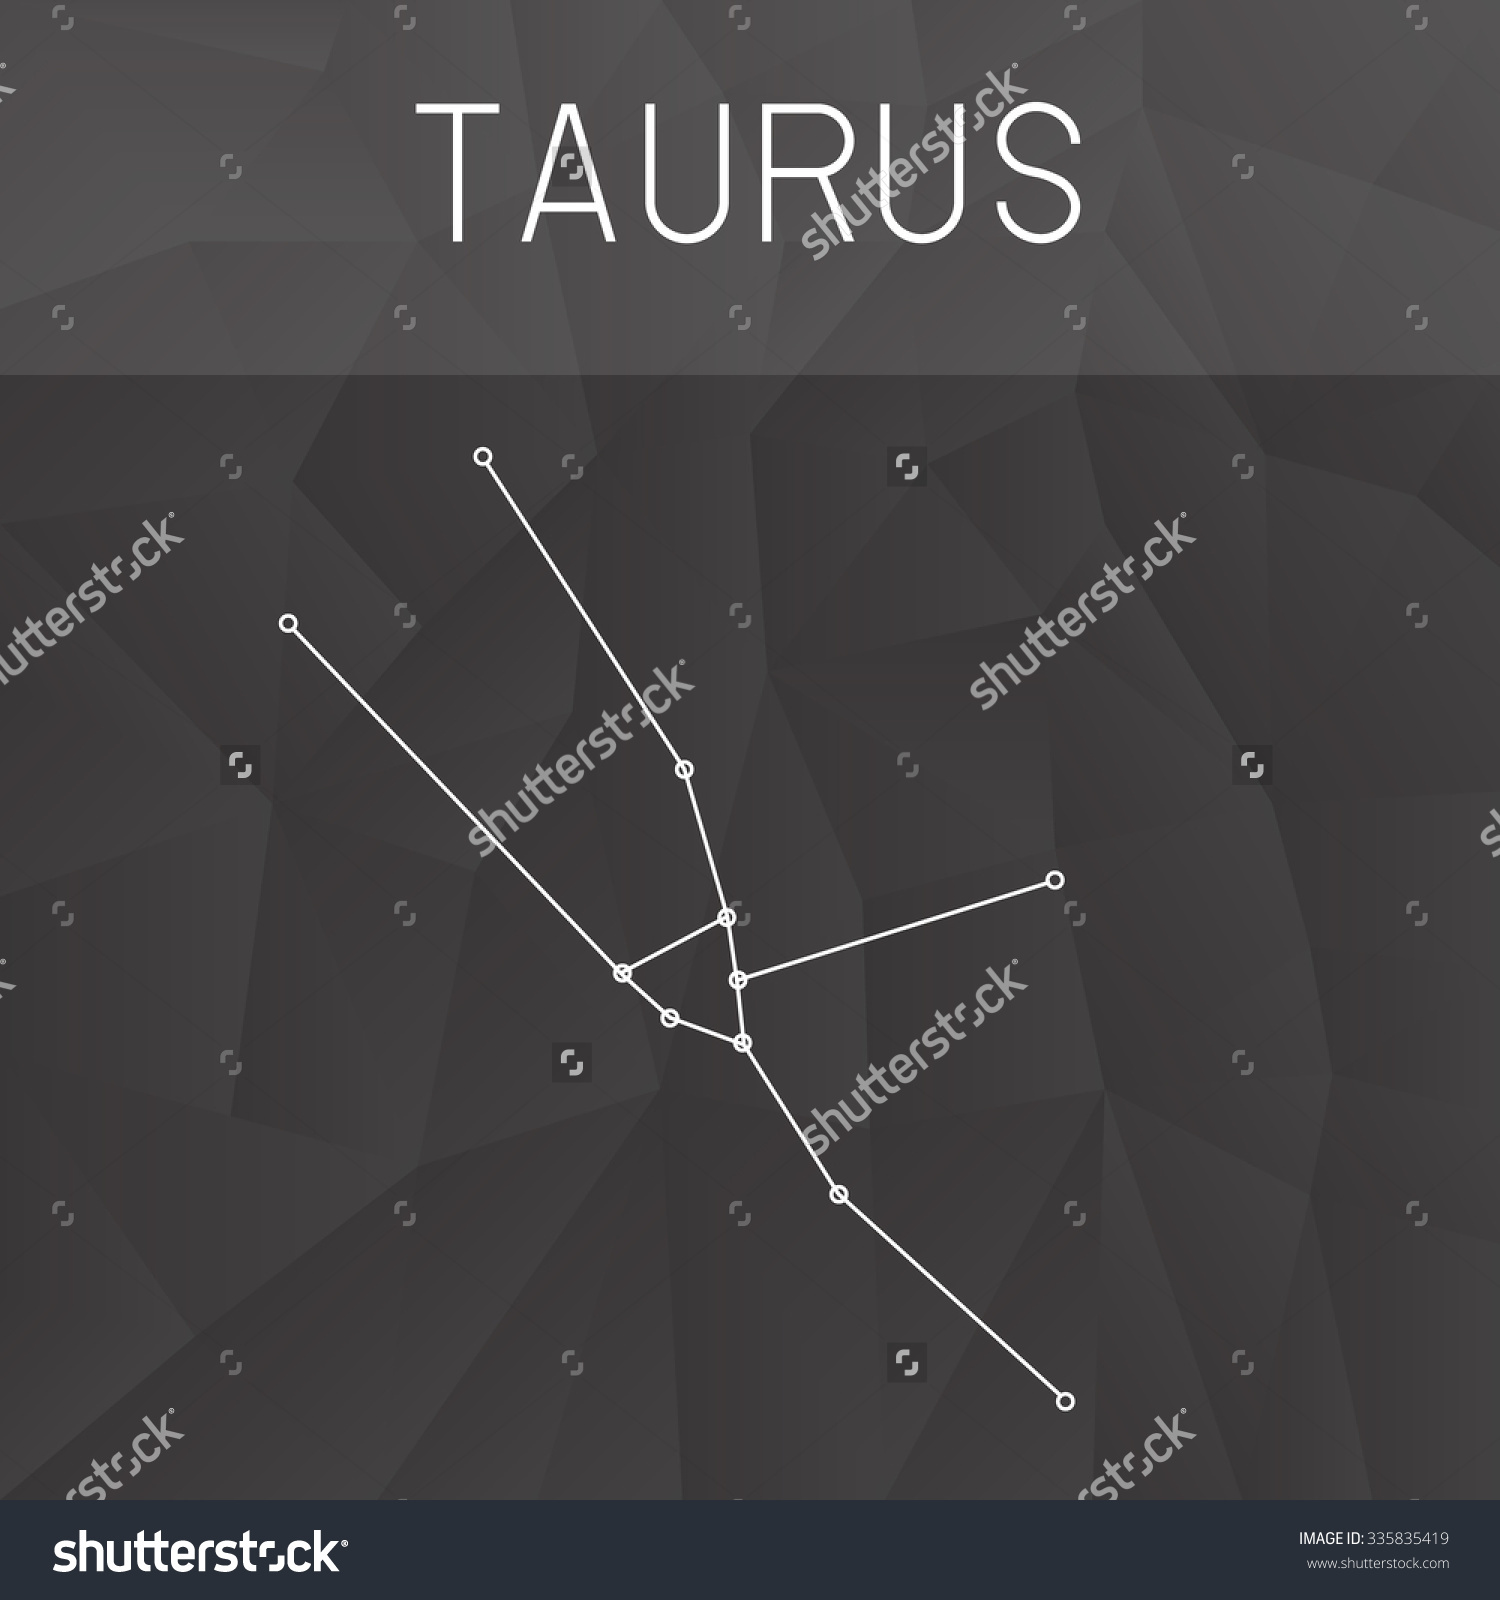 Taurus Constellation Stock Vector 335835419.